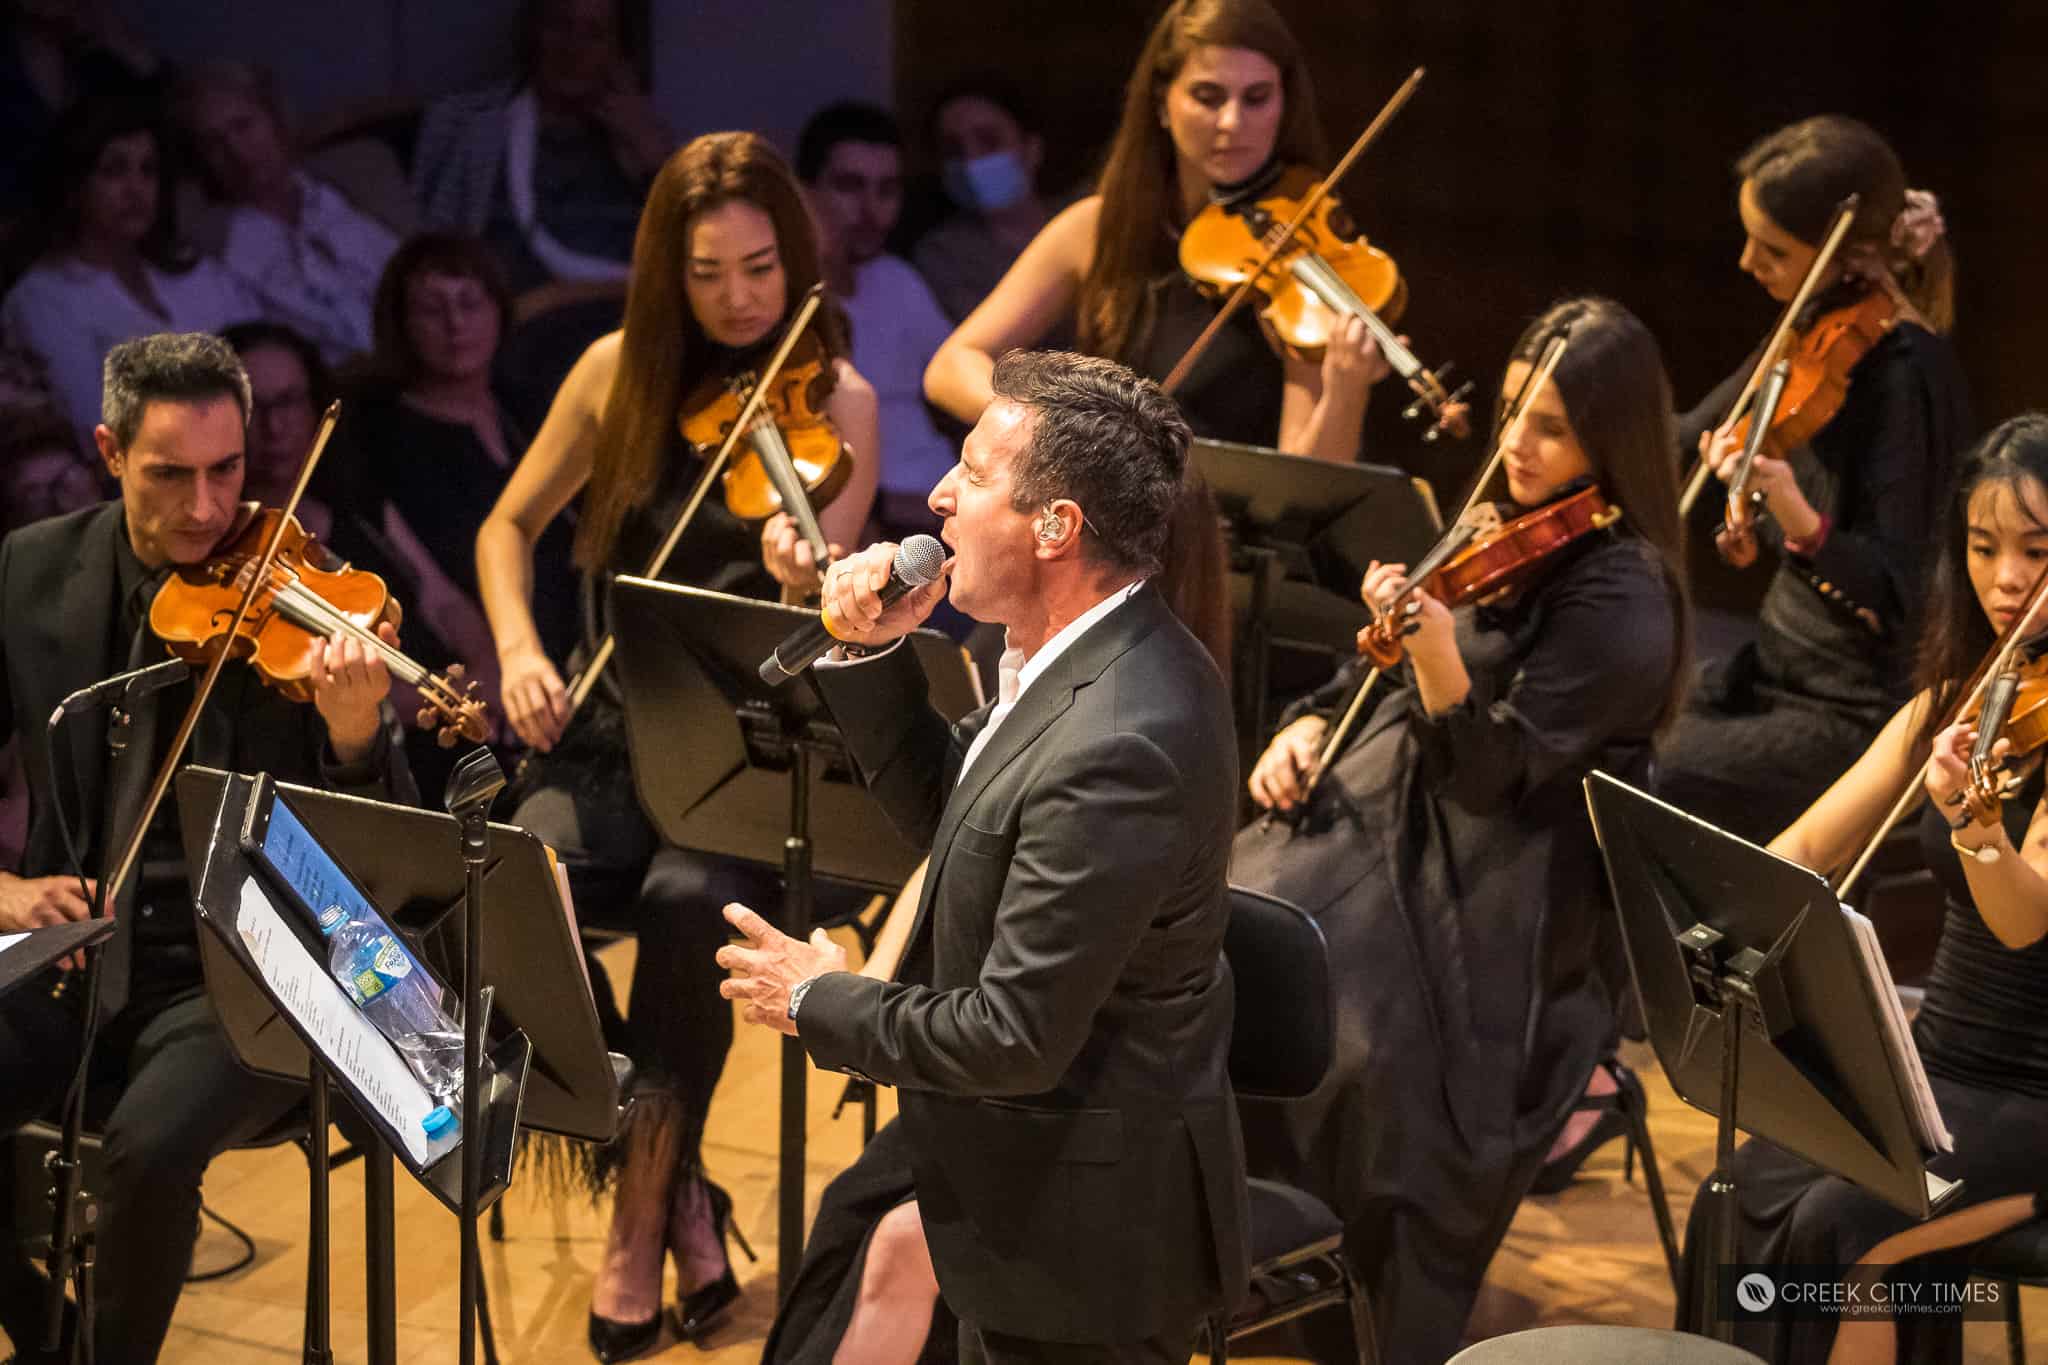 Miki Theodorakis Tribute Concert at City Recital Hall a resounding success 47